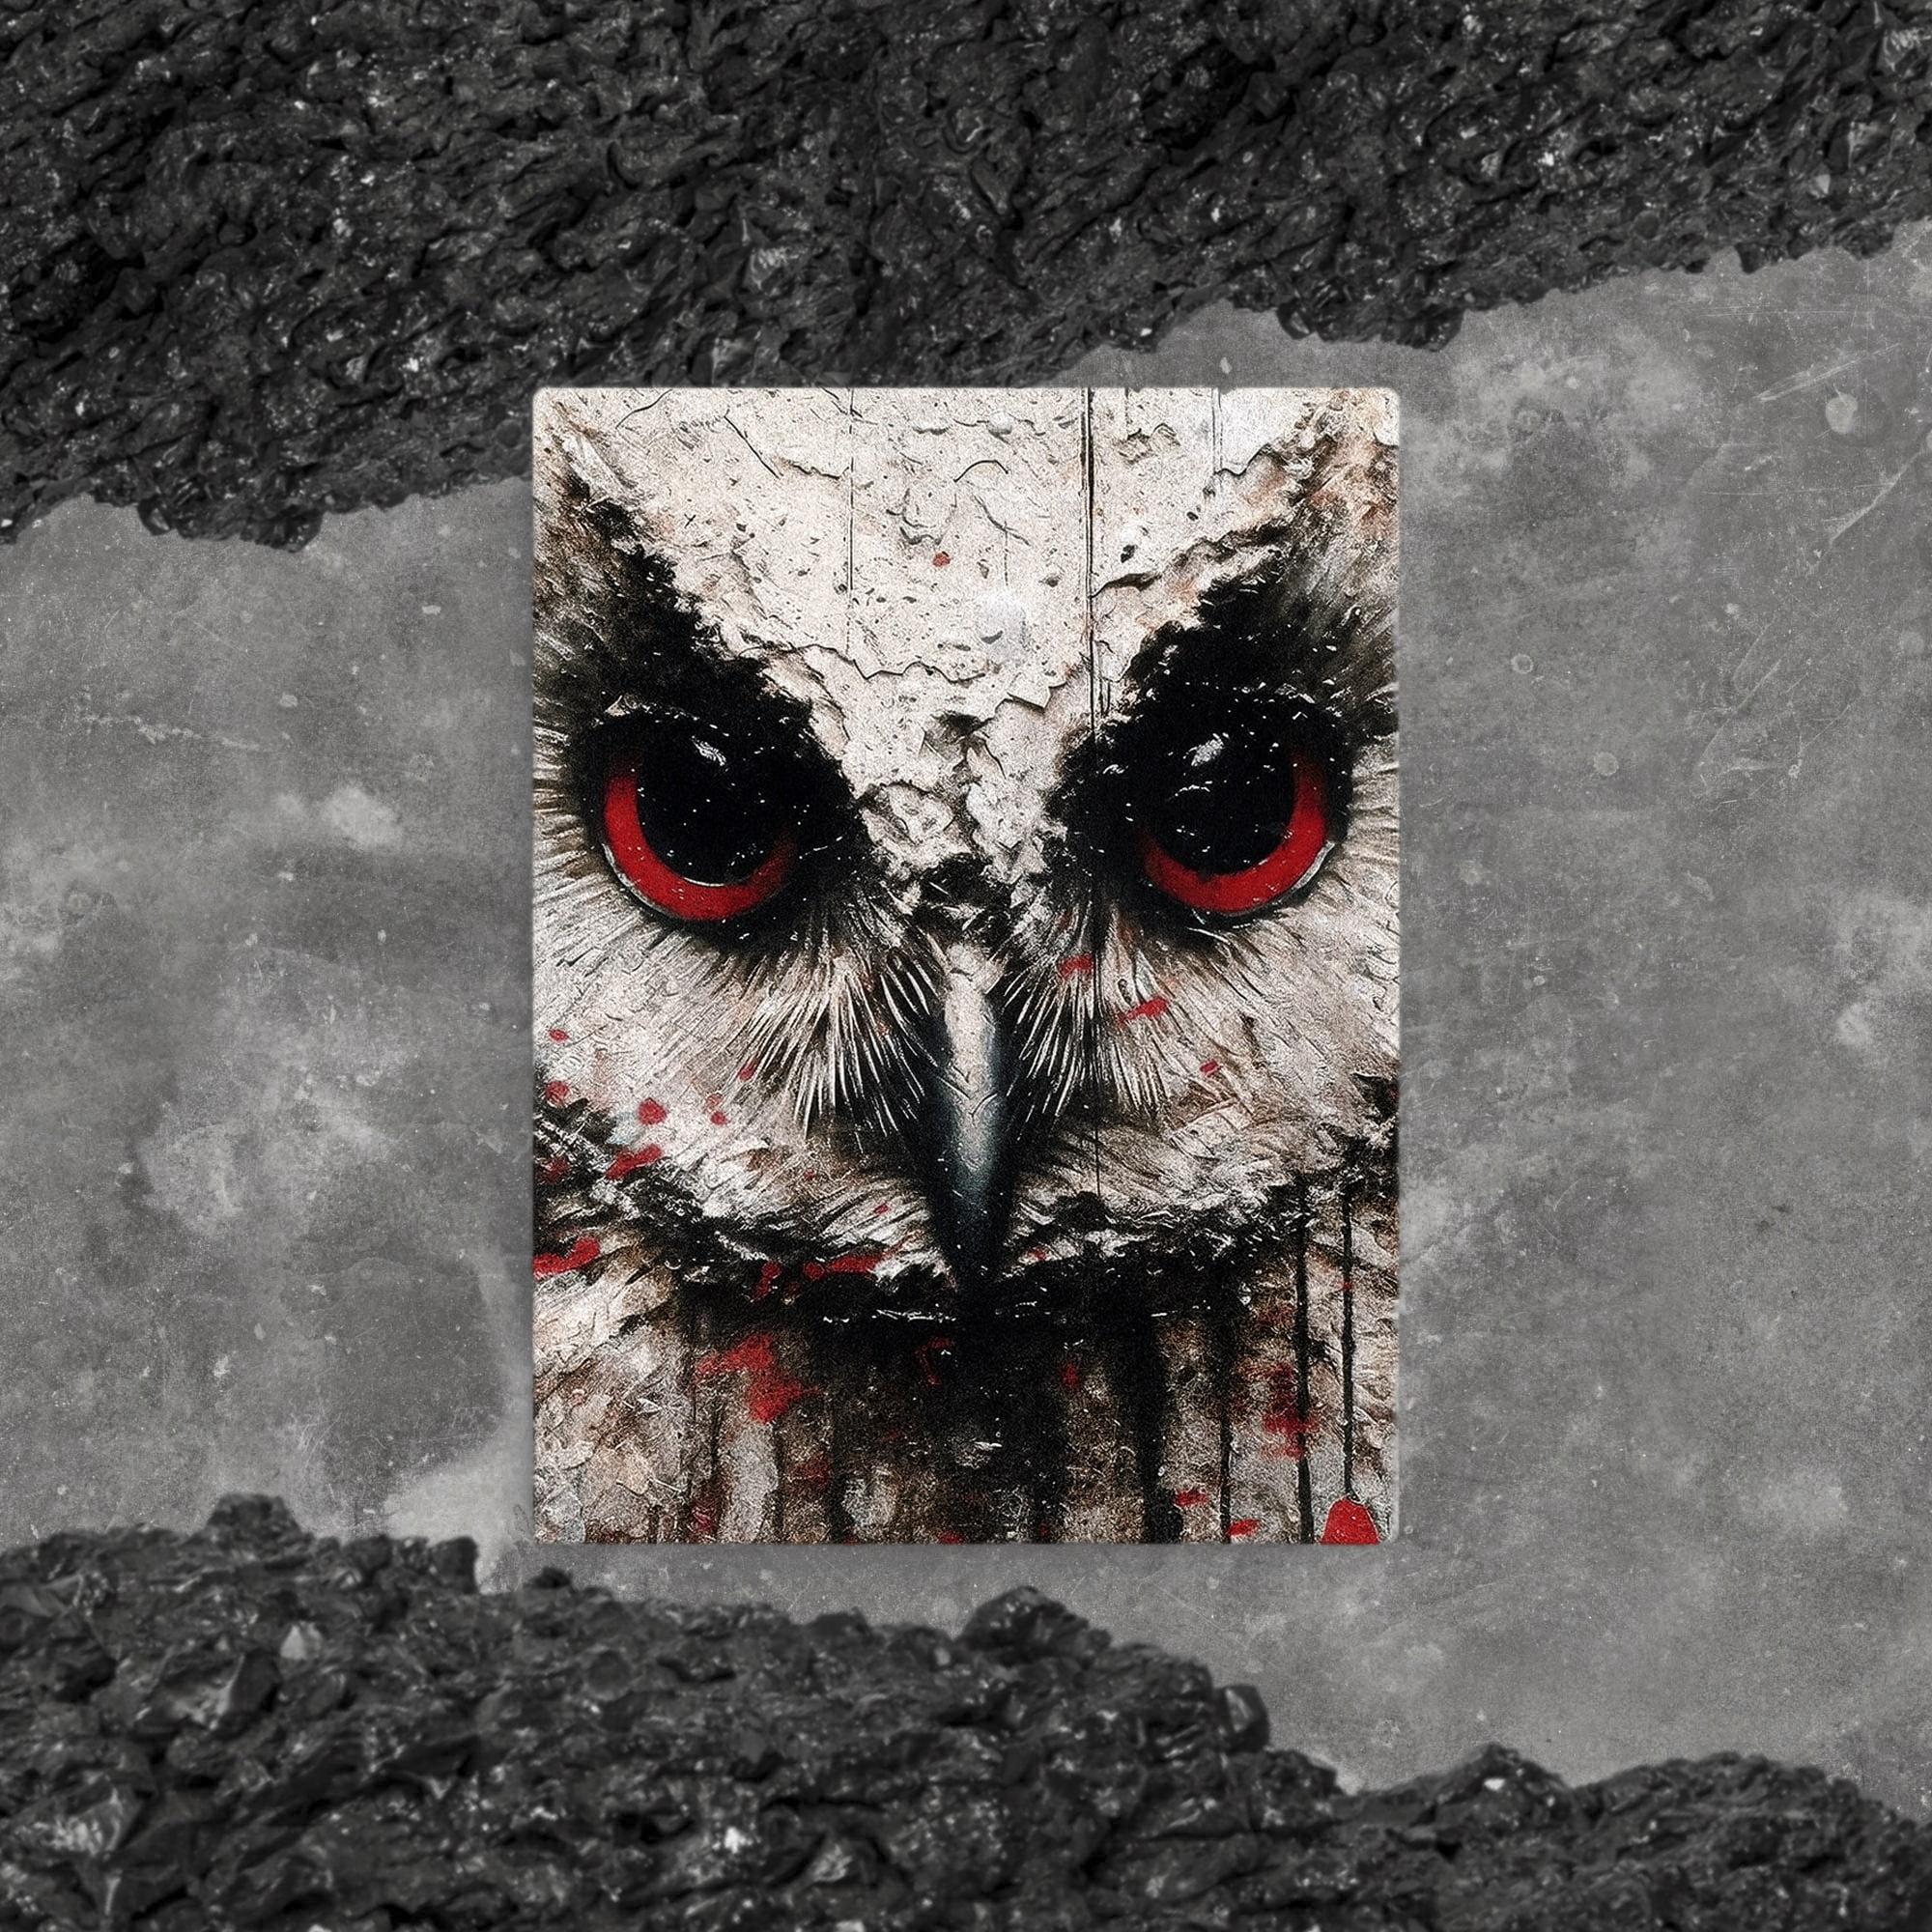 The Owl 12x16 inch Canvas Art Print (Owl Wall Art)